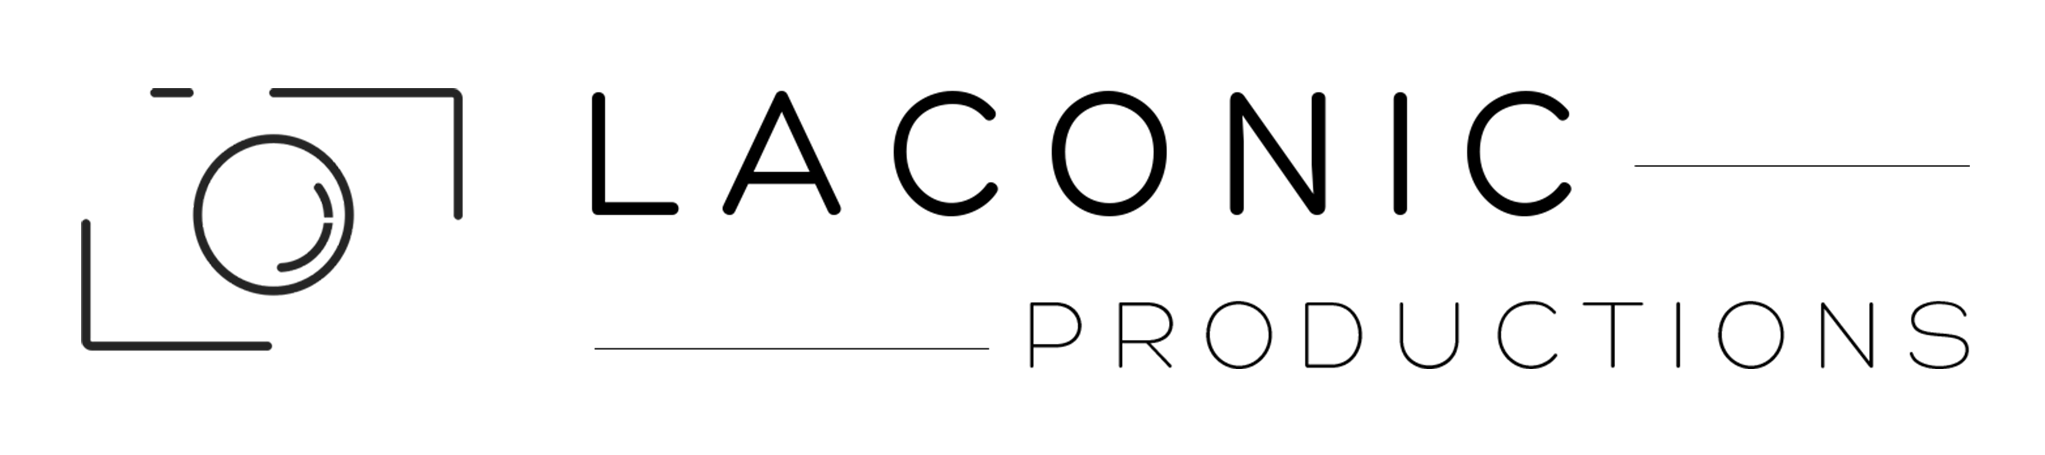 Laconic Productions